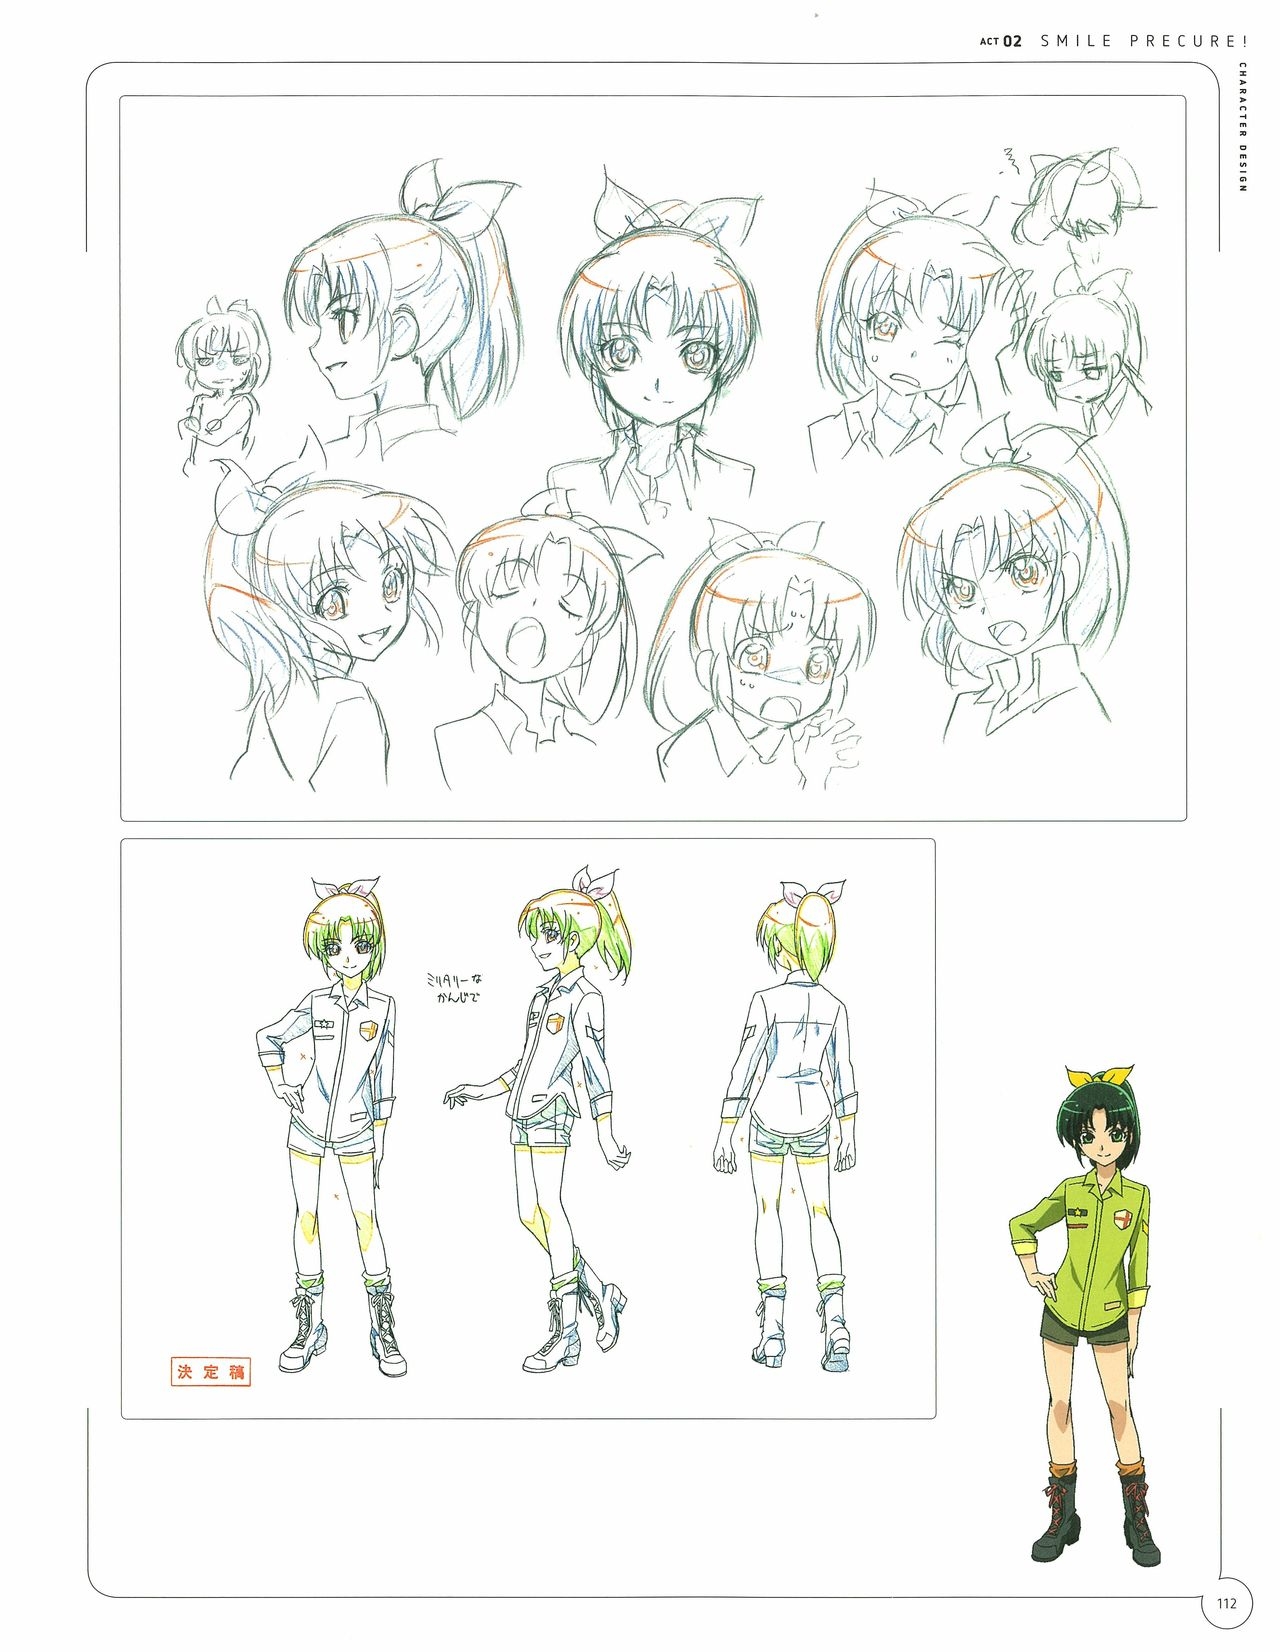 Kawamura Toshie - Toei Animation Precure Works 112